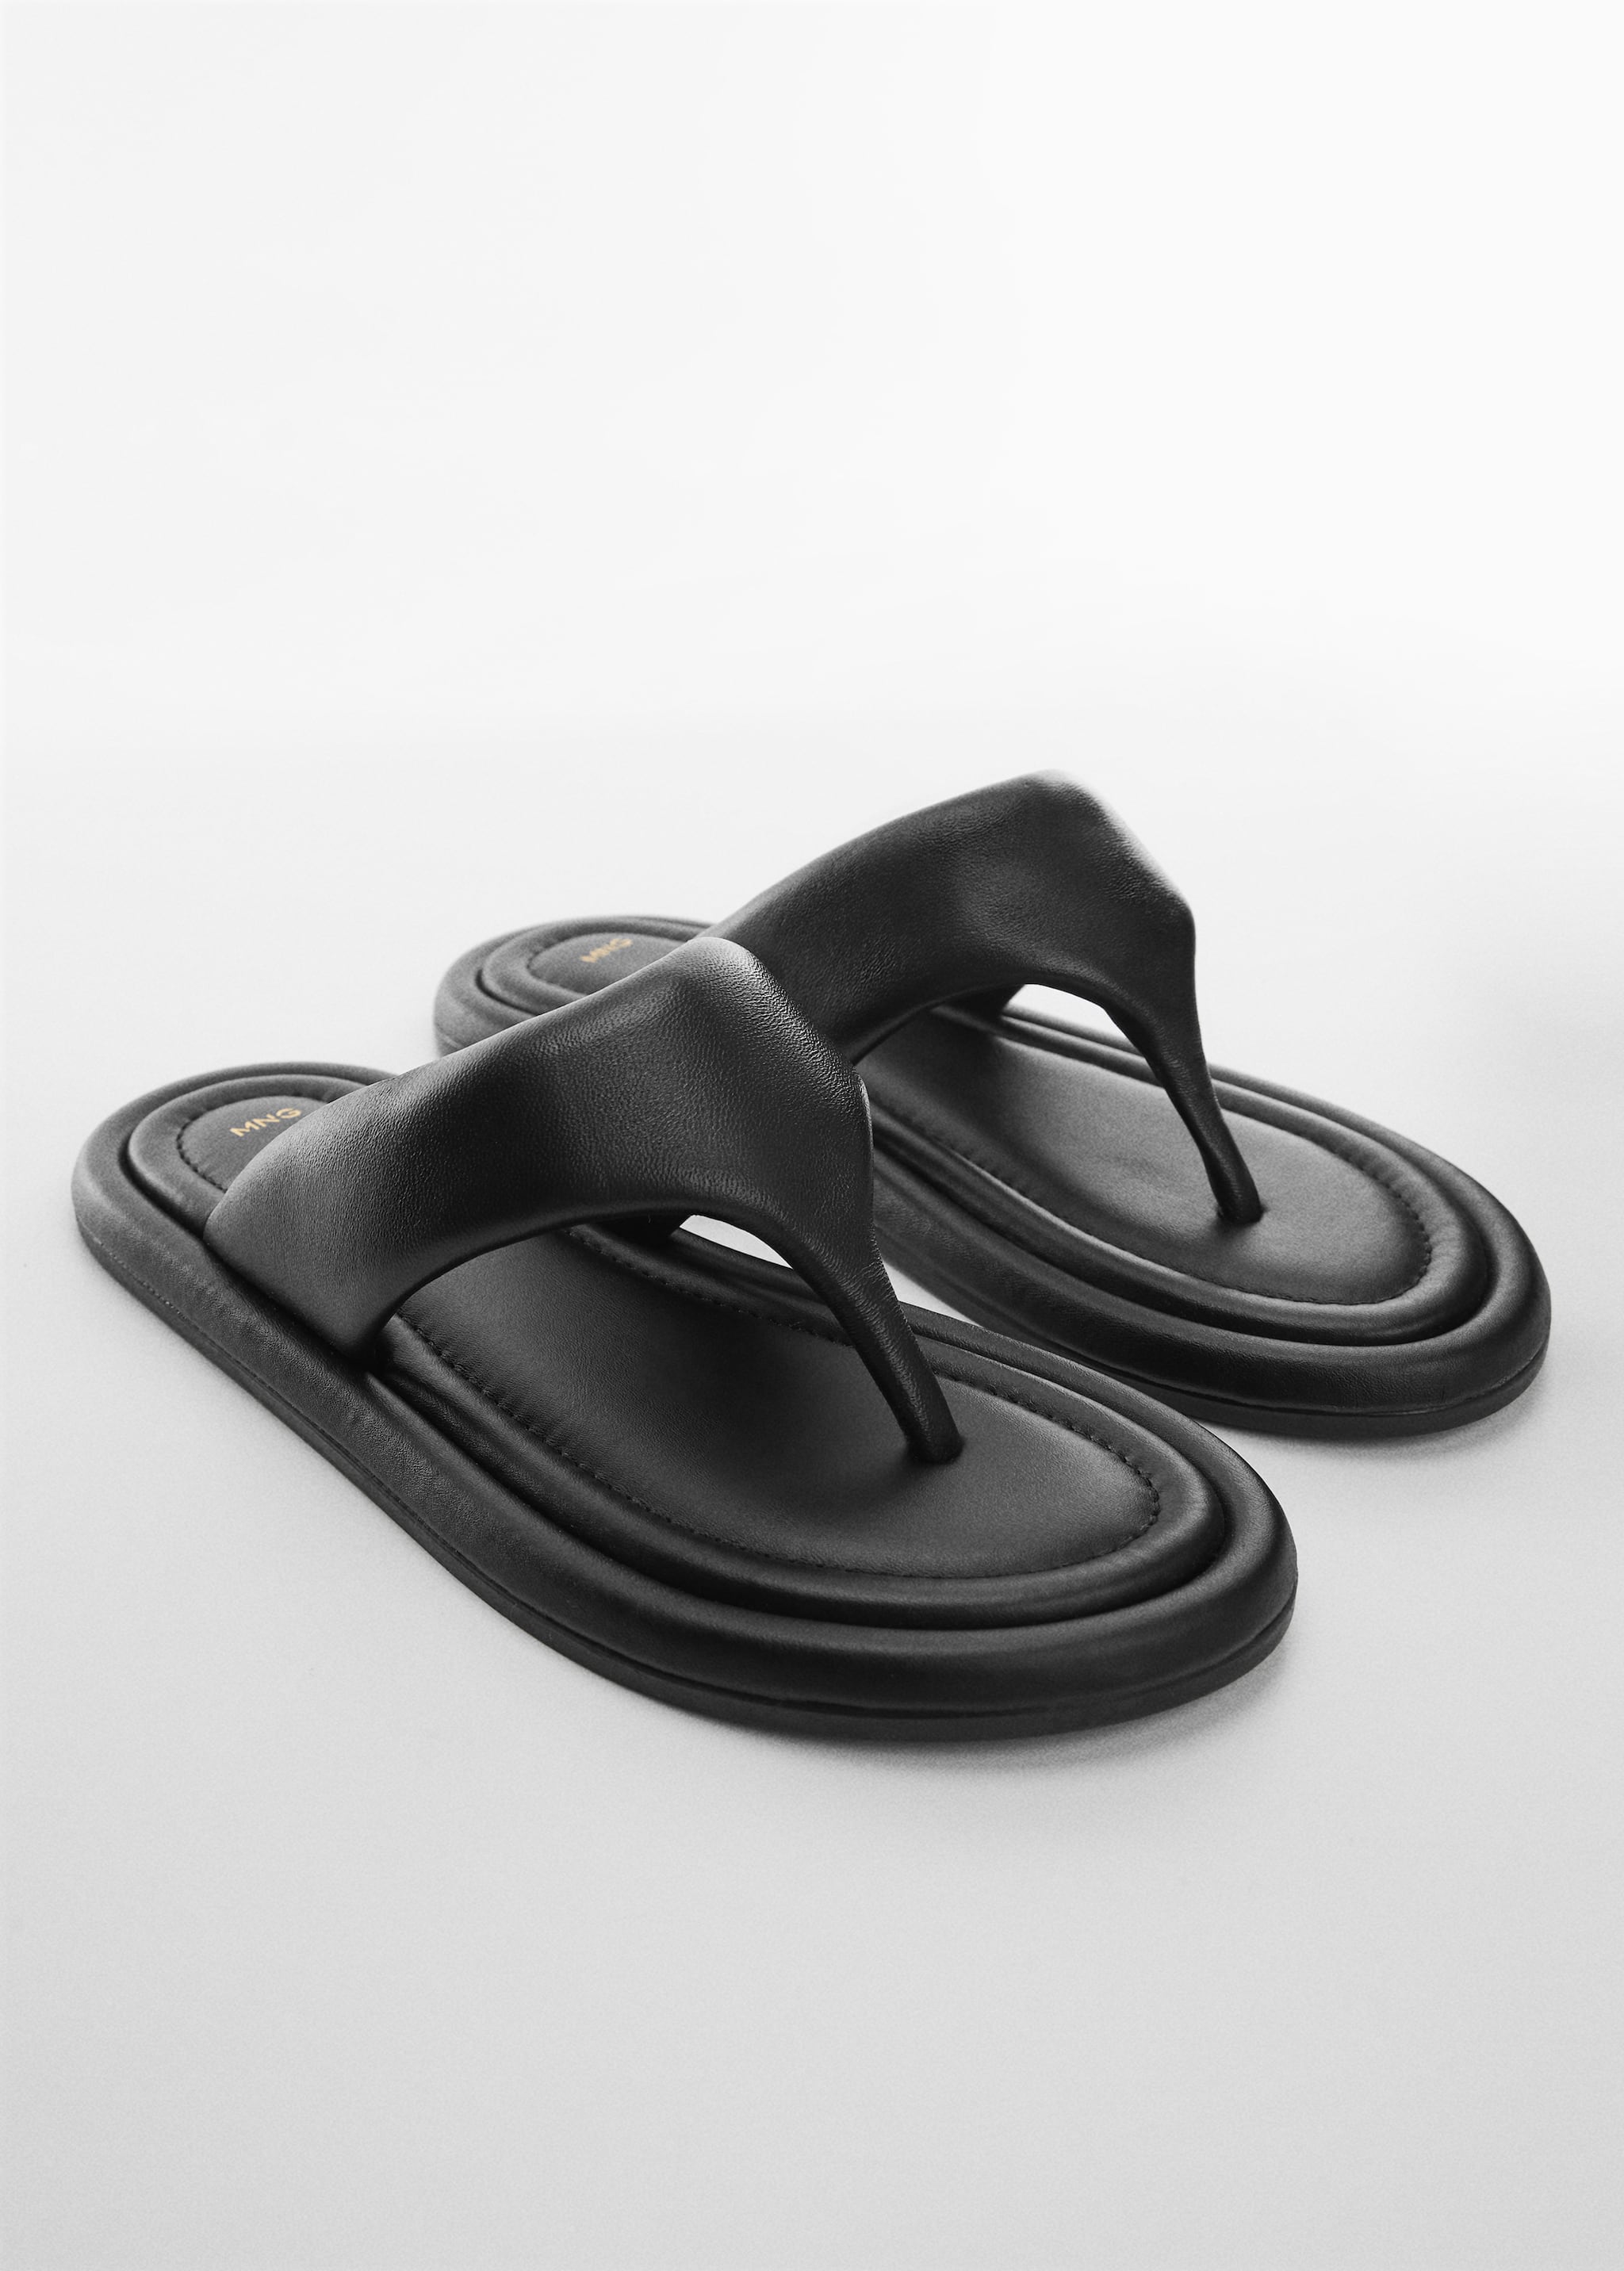 Leather sandals with straps - Medium plane